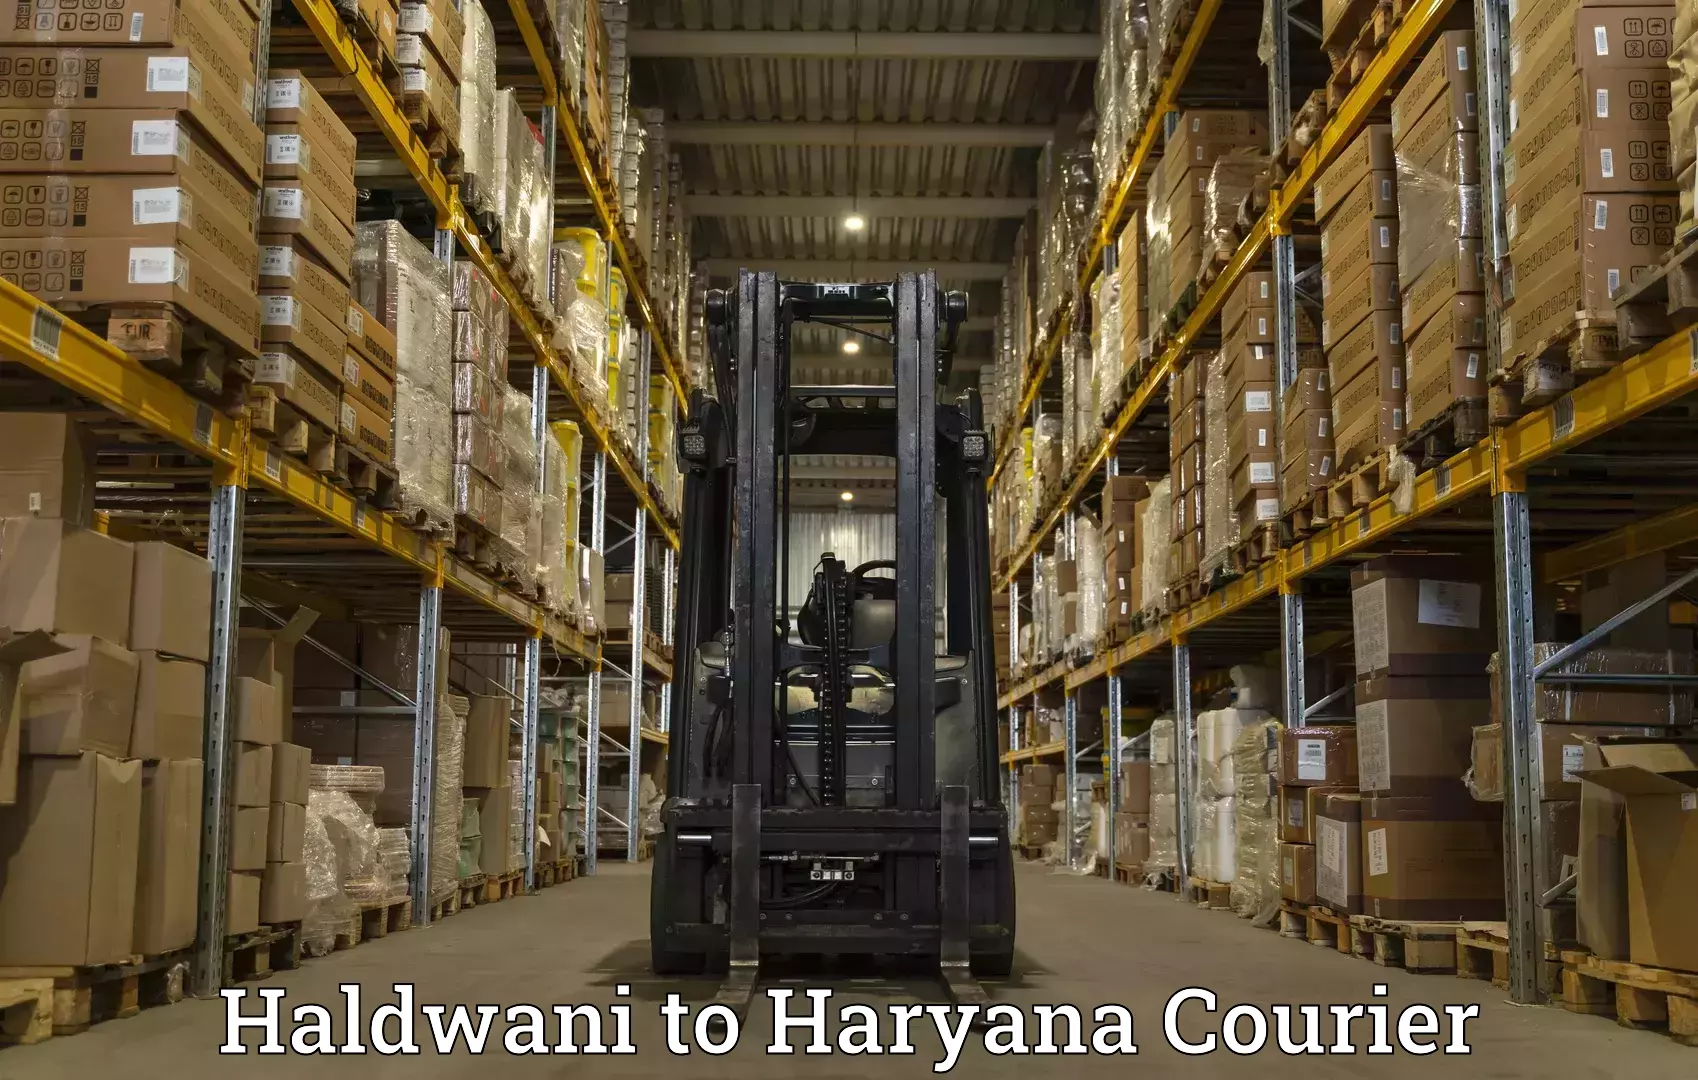 Global shipping networks Haldwani to Haryana